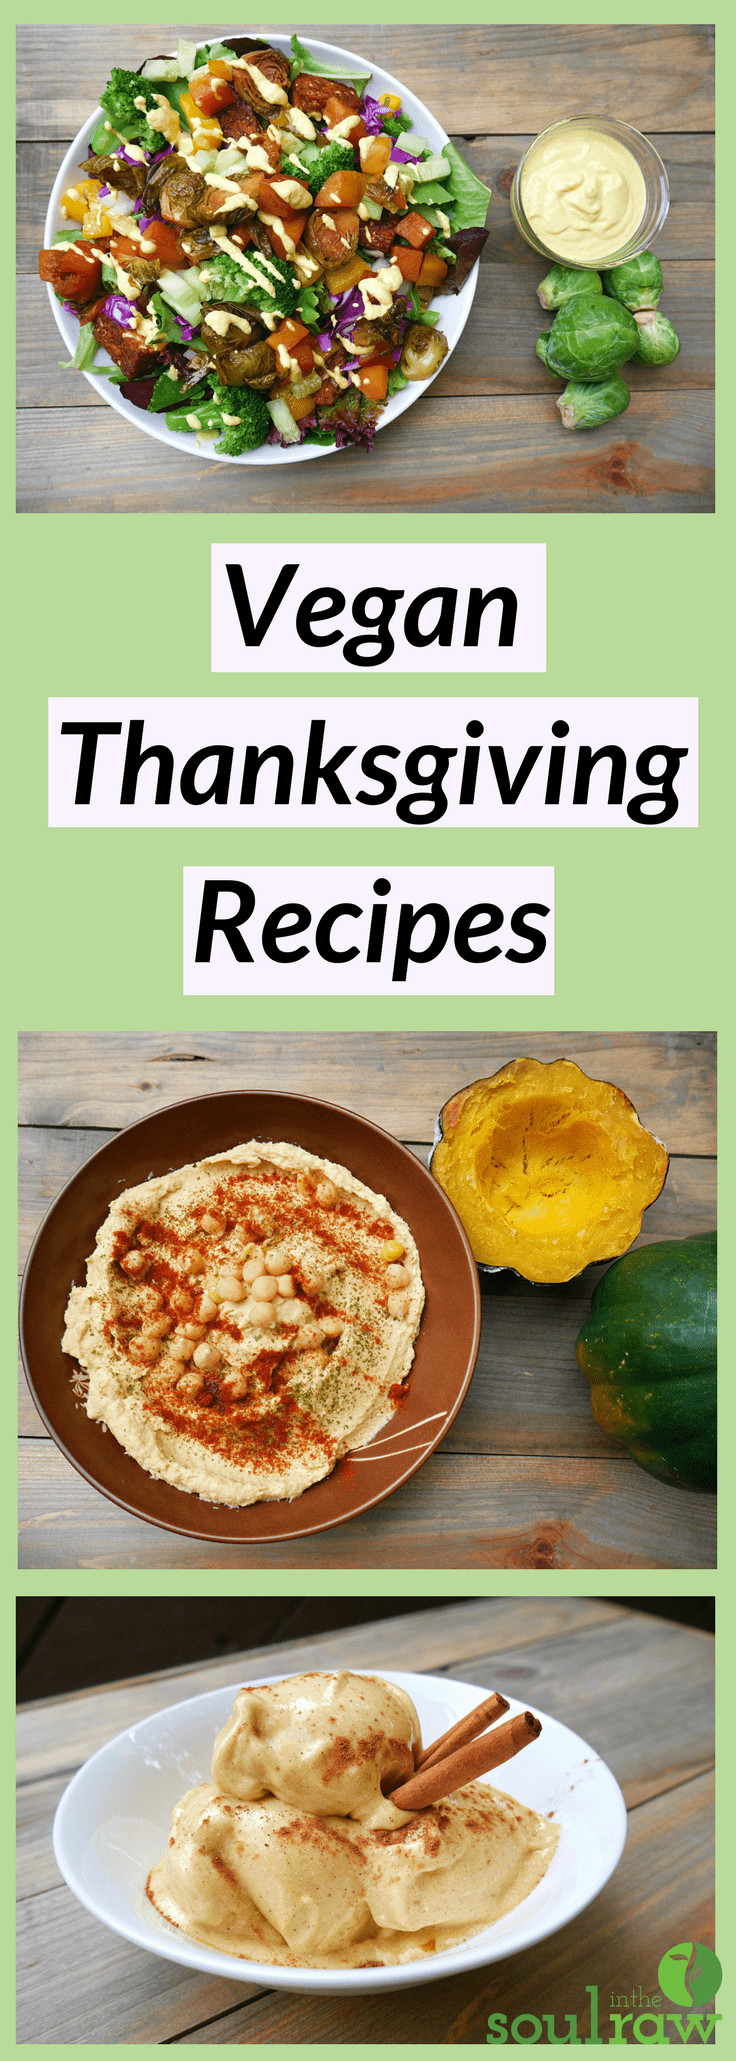 Vegan Thanksgiving Dinner Recipes
 Vegan Thanksgiving Recipes 3 Easy Thanksgiving Dinner Ideas